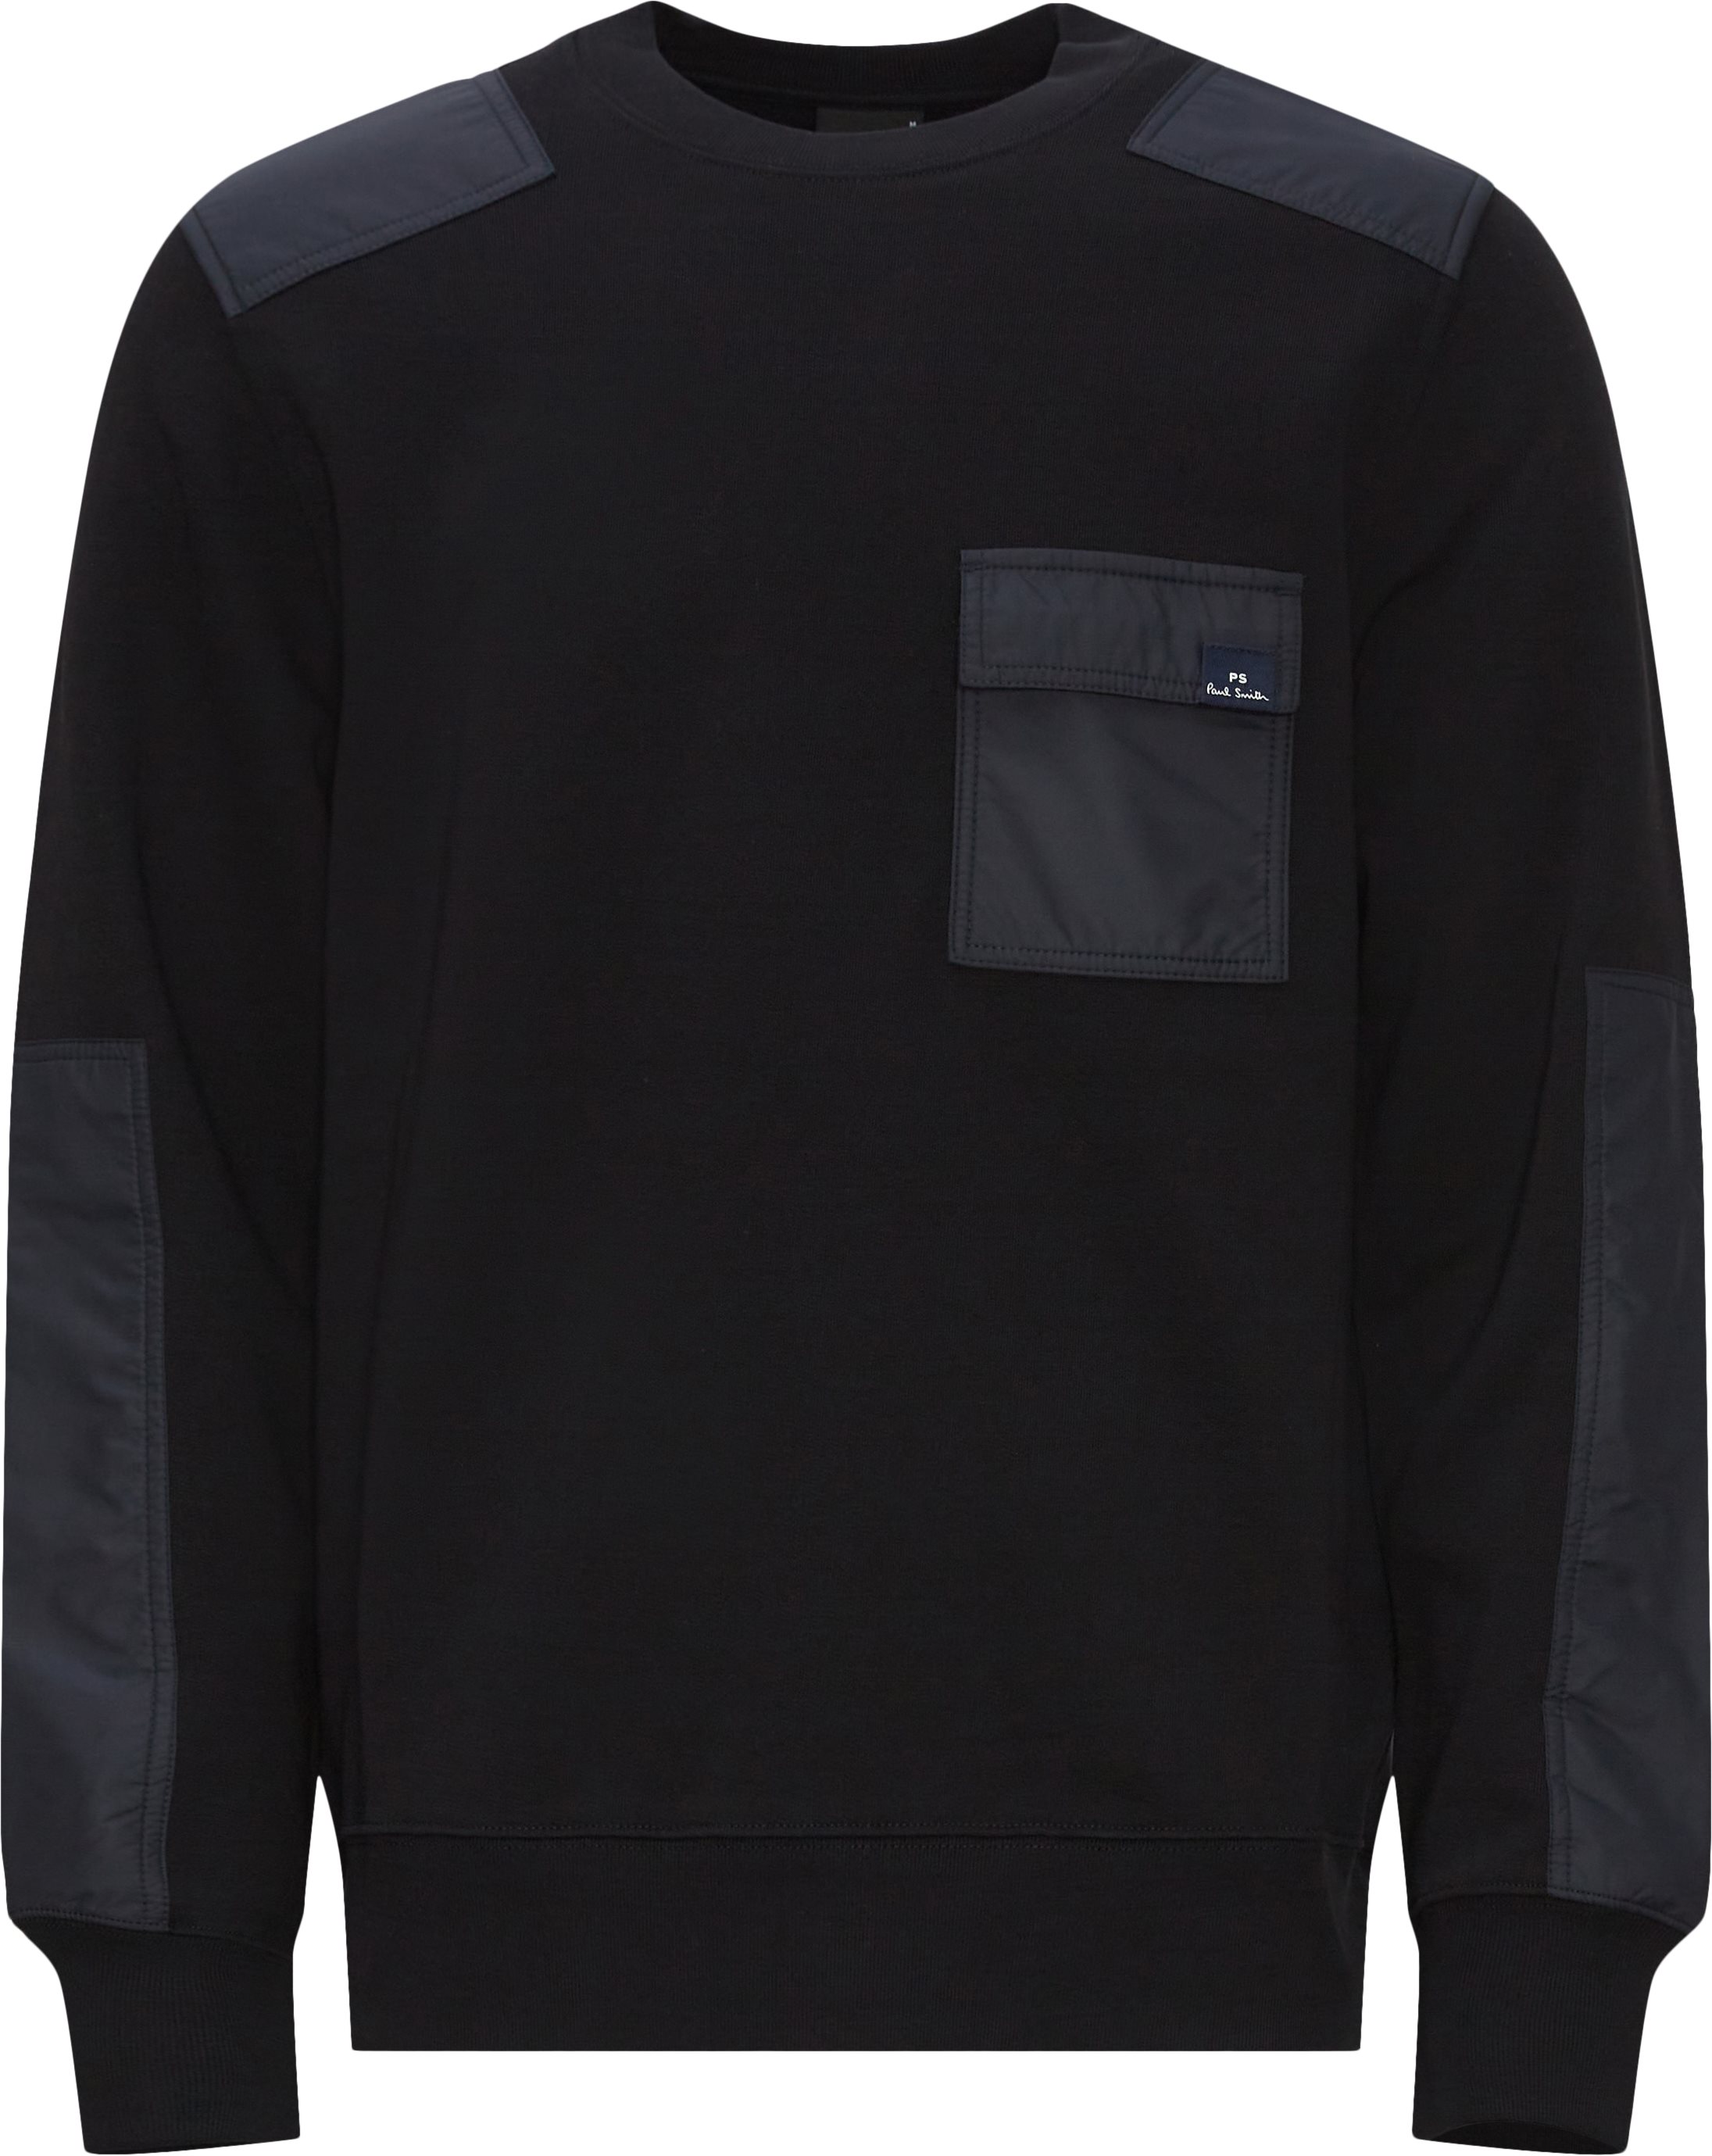 PS Paul Smith Sweatshirts 656X-J21116 Black